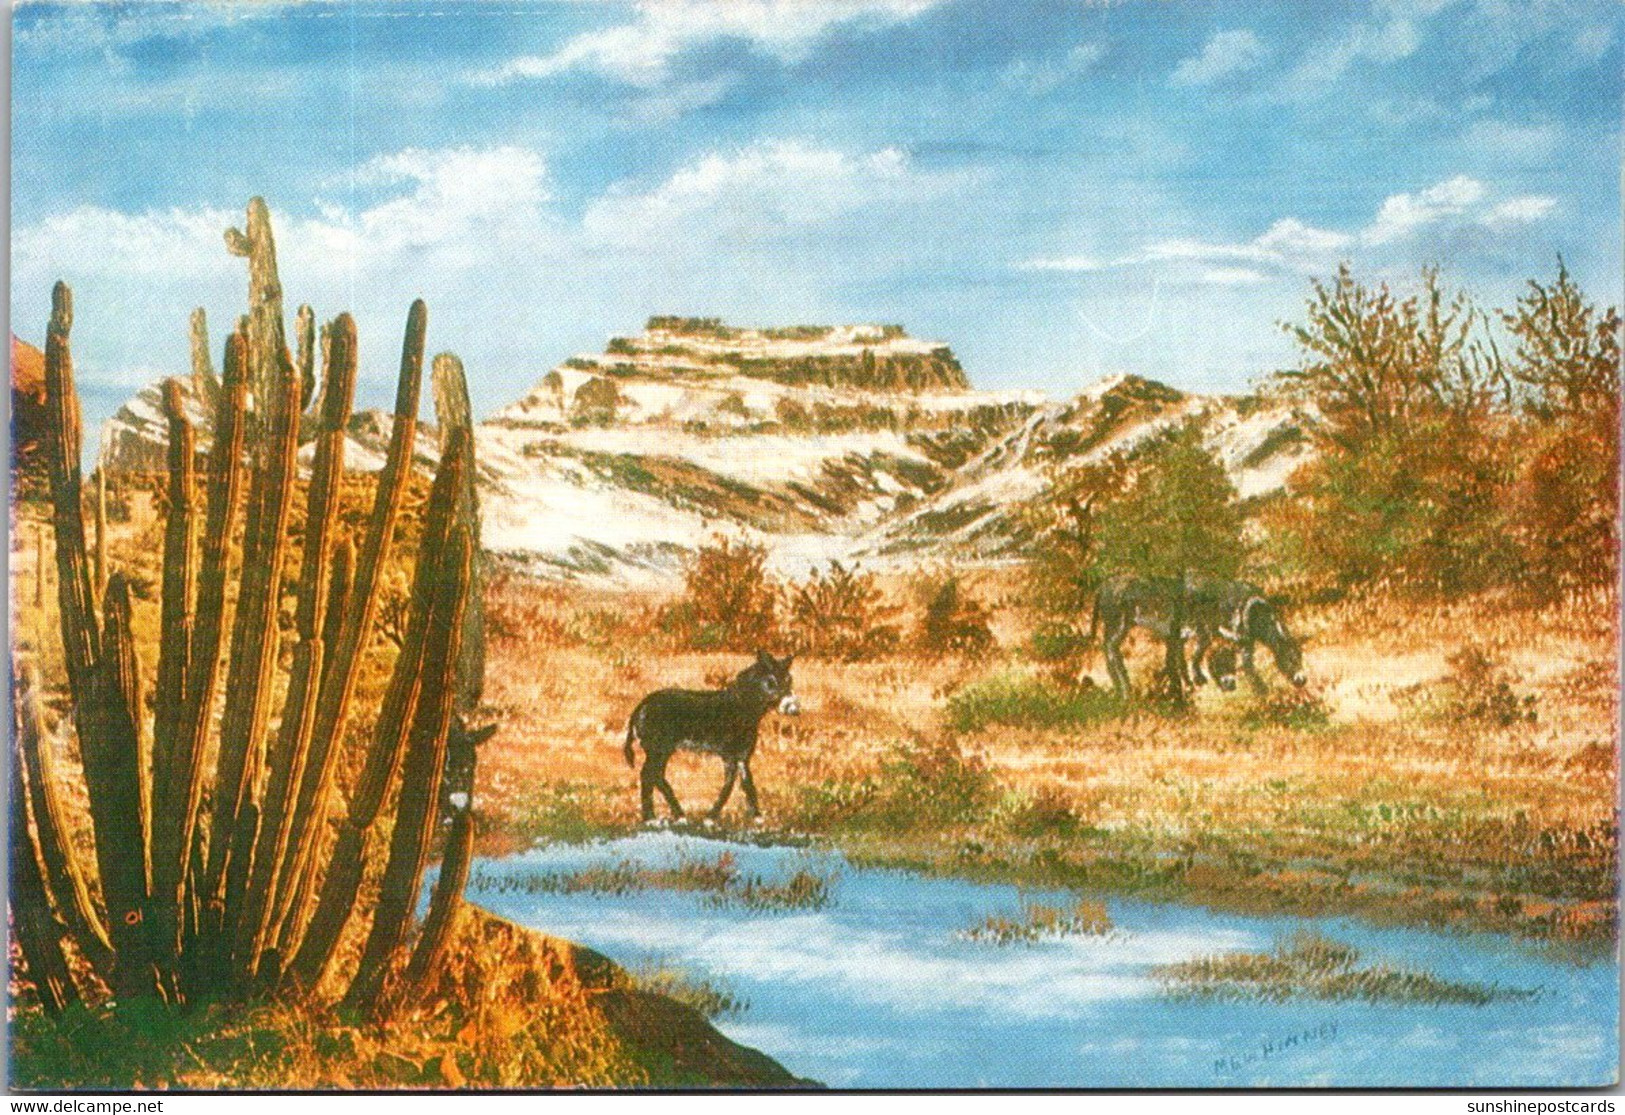 Arizona Winter Southwest Desert Near Tucson Original Oil Painting By William Mewhinney - Tucson